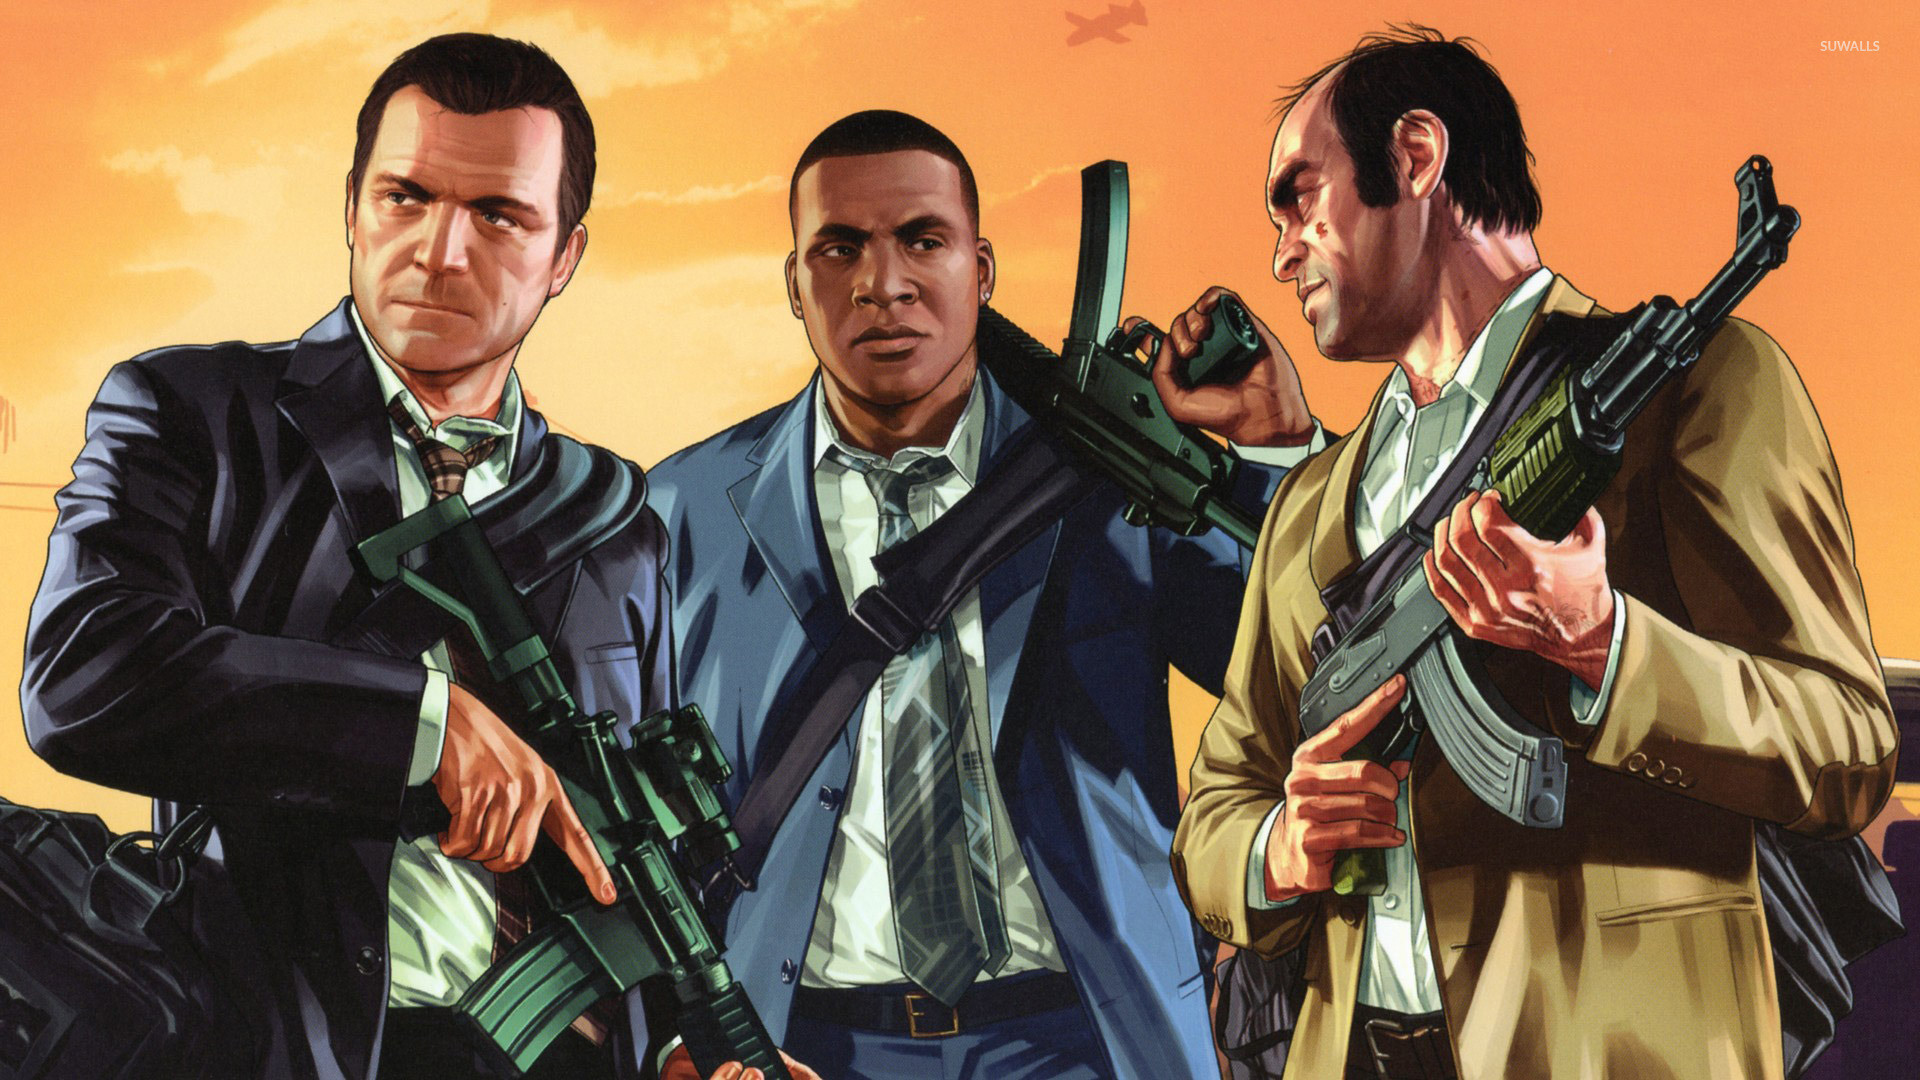 1920x1080 Grand Theft Auto V [10] wallpaper  jpg